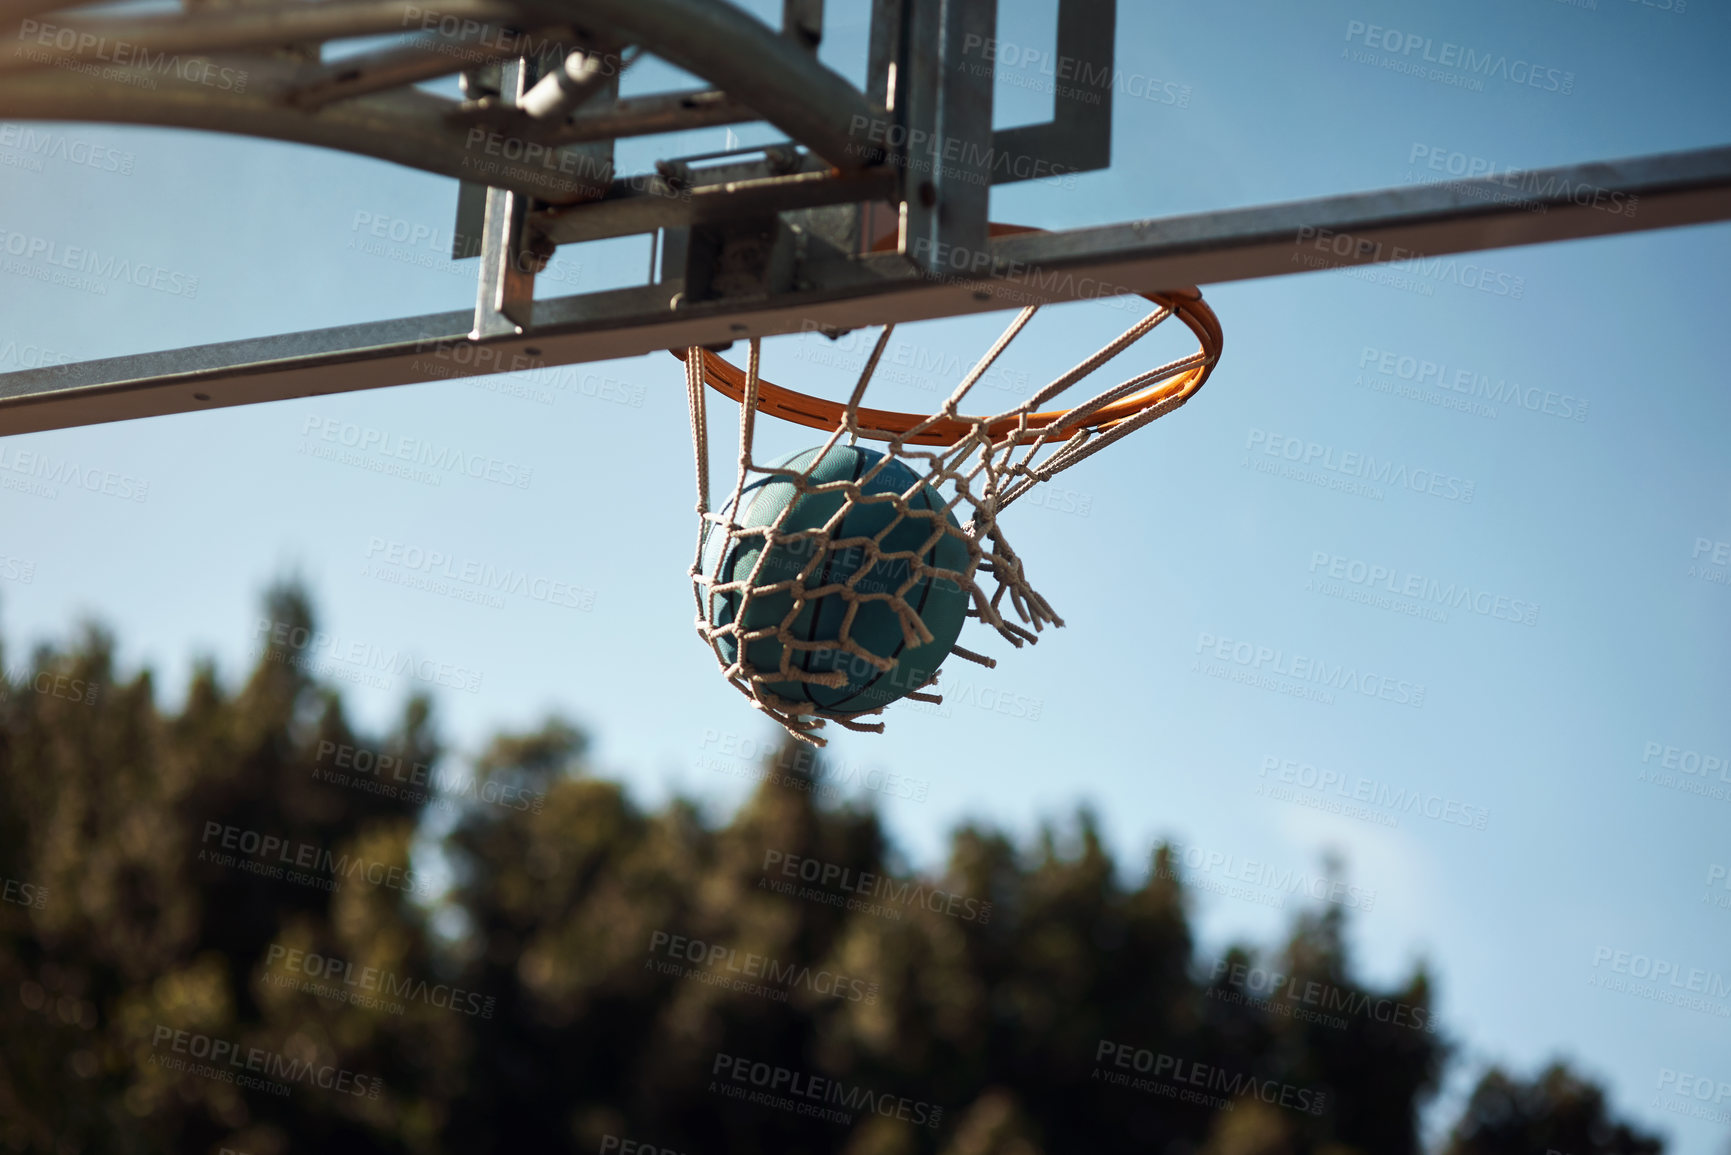 Buy stock photo Closeup shot of a basketball landing into a net on a sports court